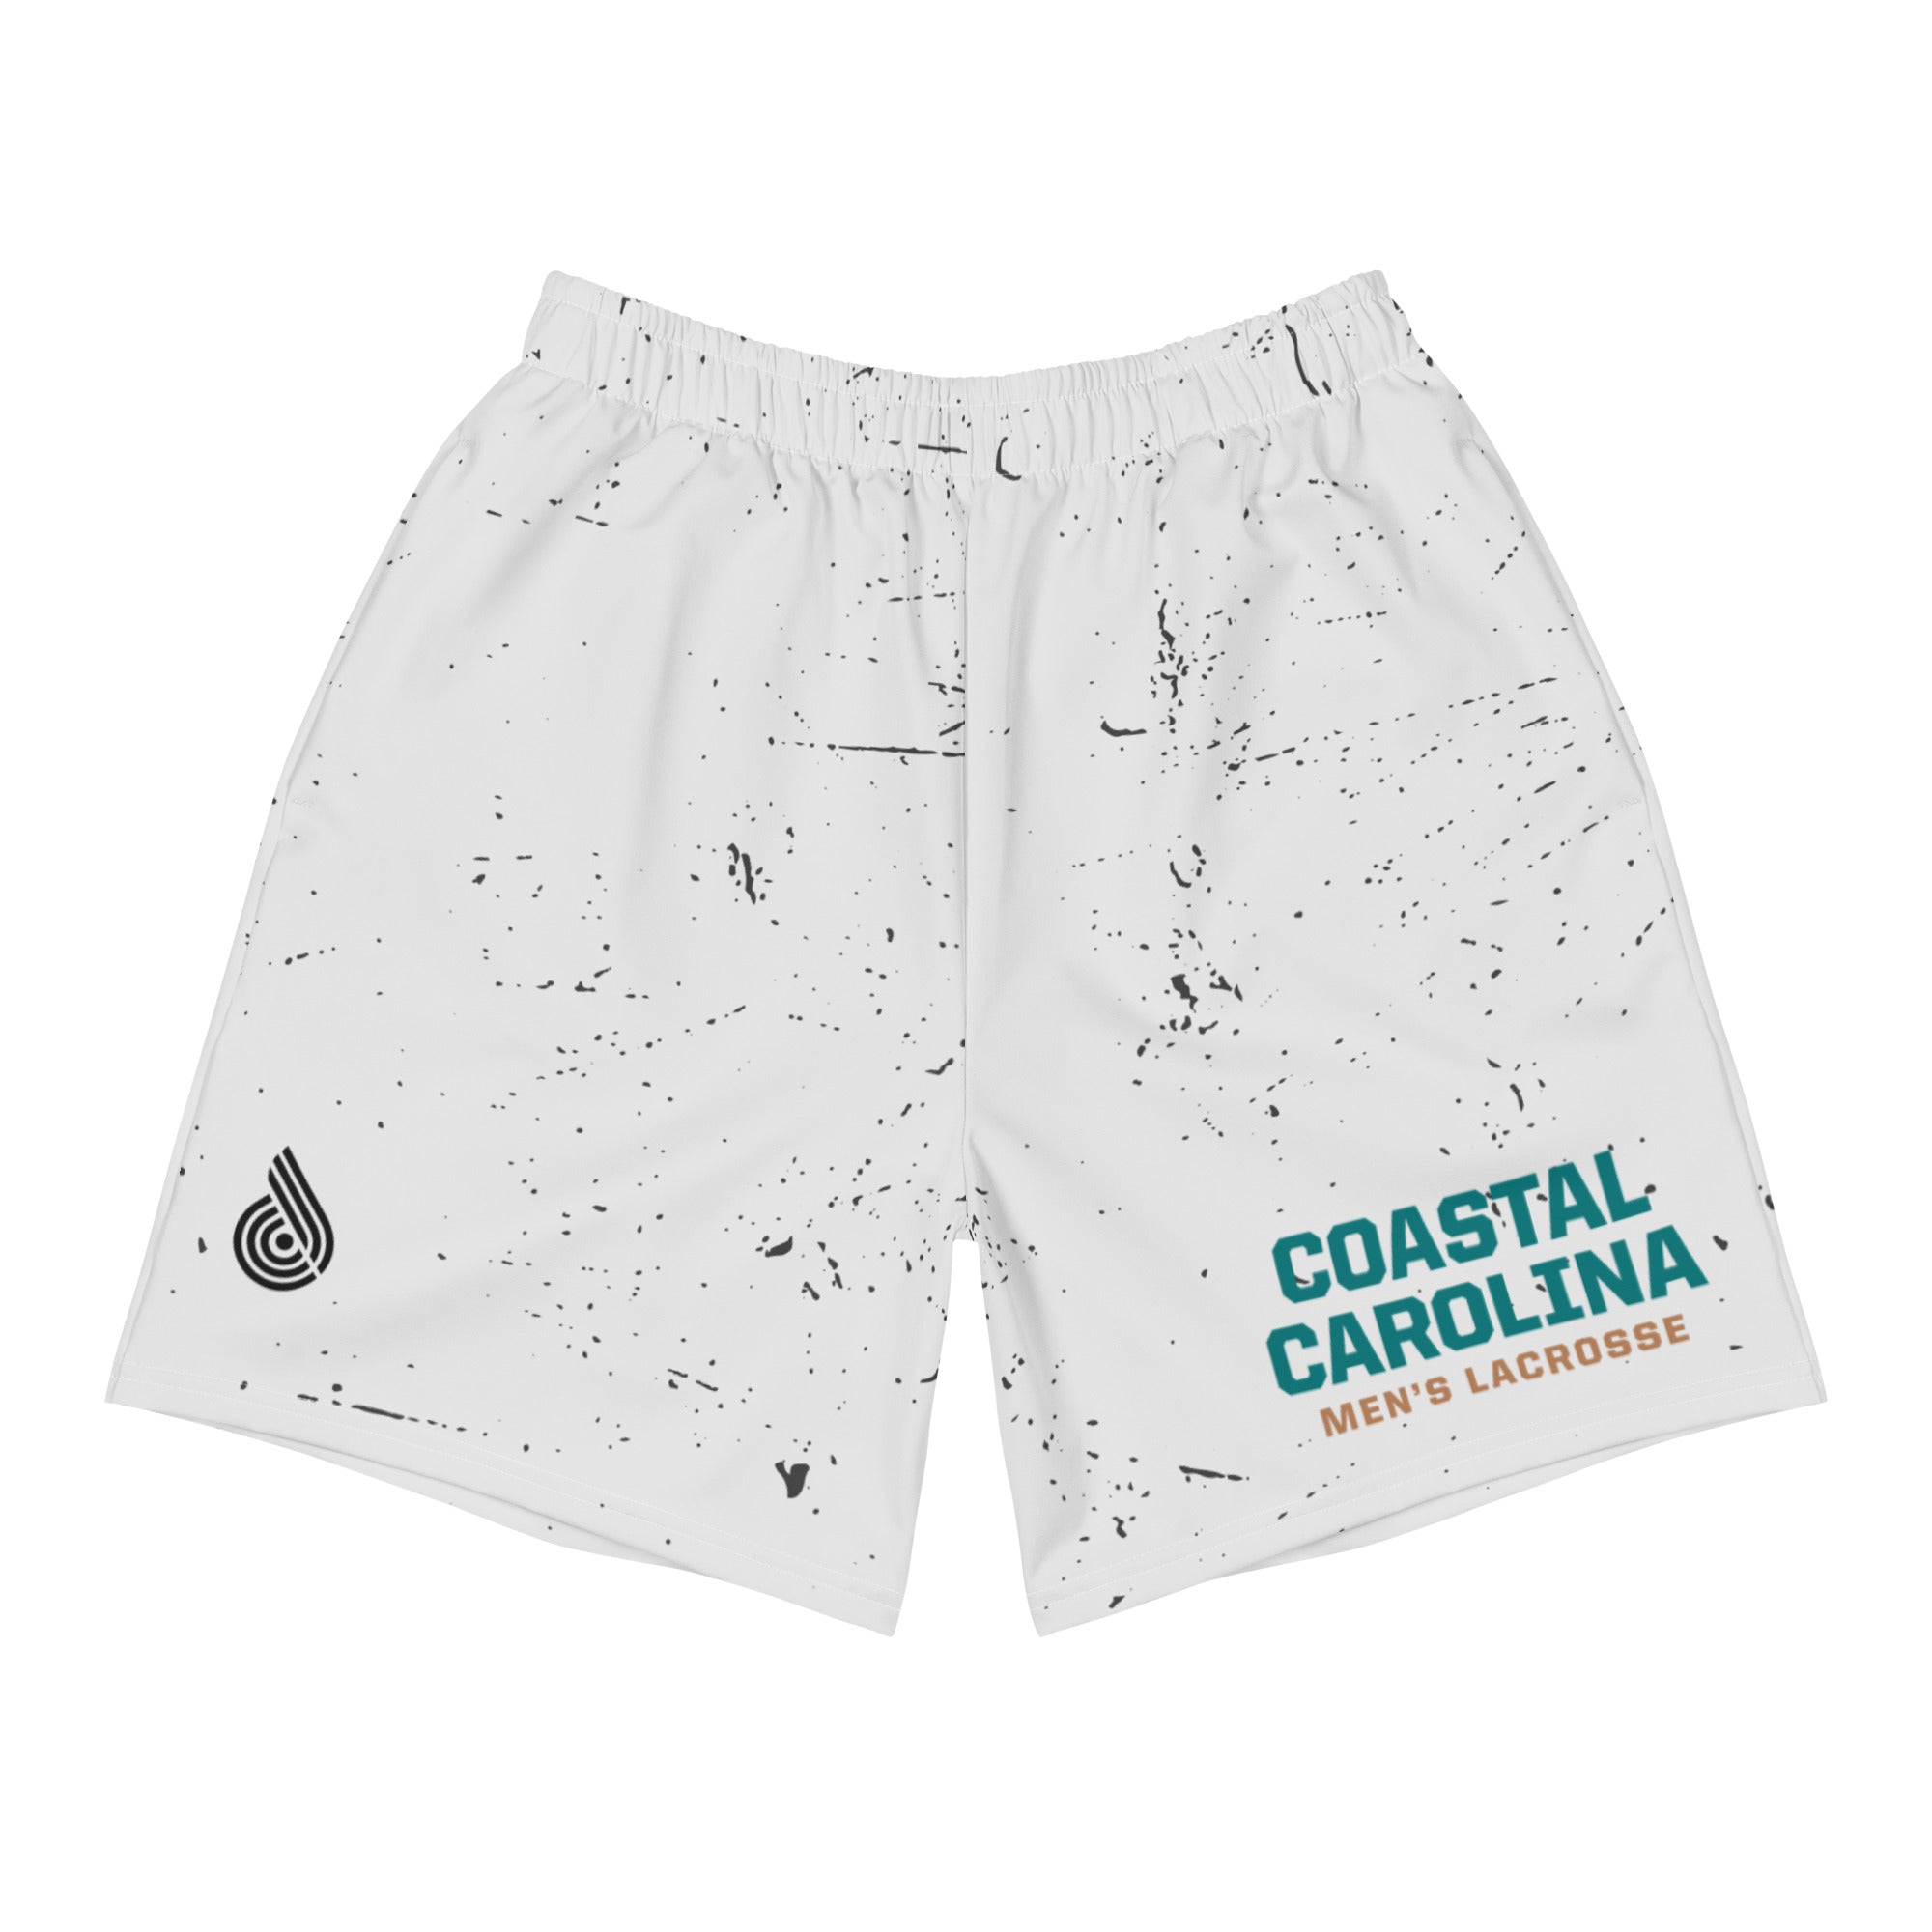 Coastal Carolina Men's Athletic Shorts